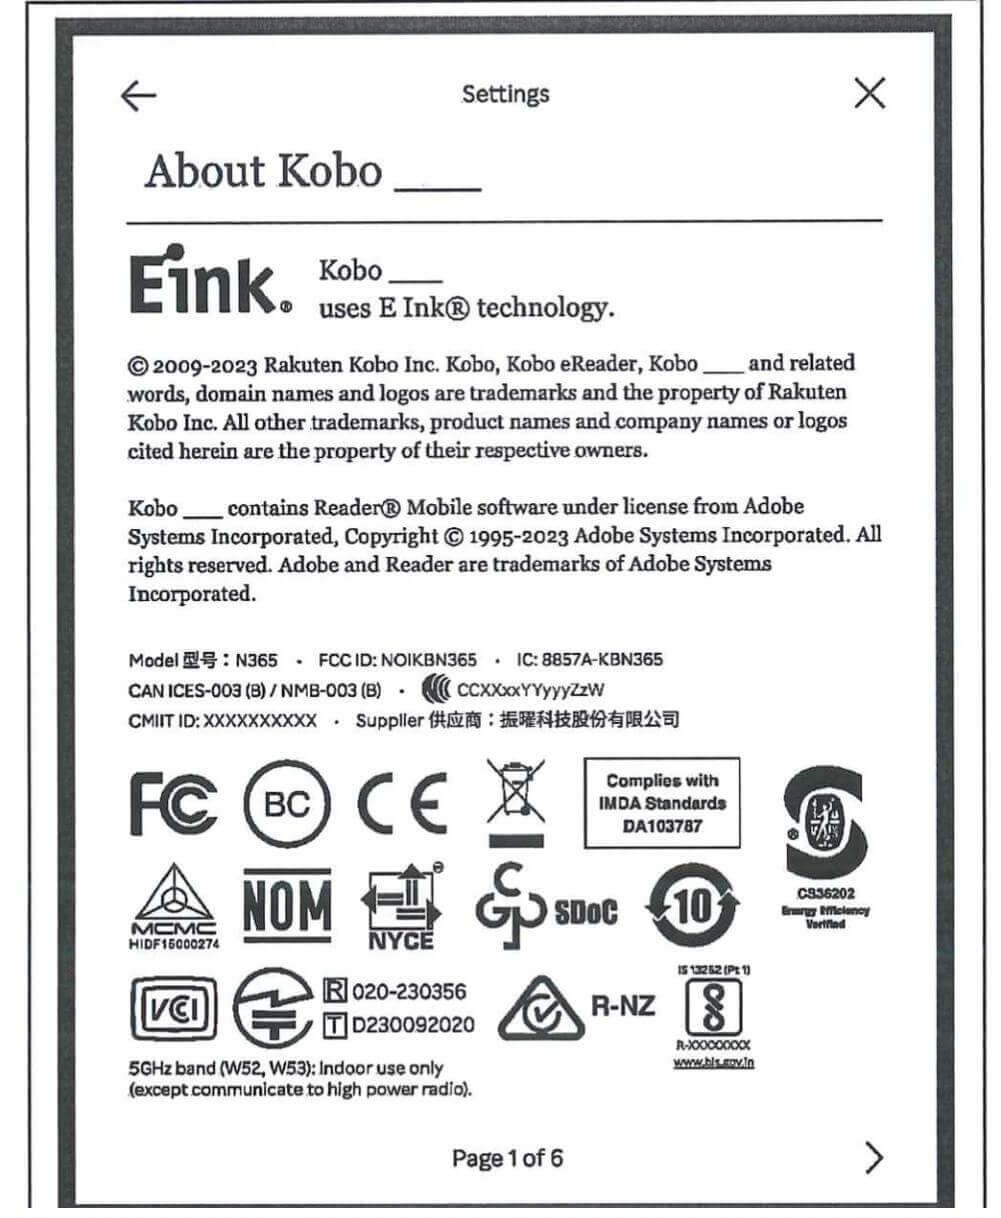 Rakuten Kobo launches Kobo Clara 2E, Kobo Libra 2 and Kobo Nia e-readers